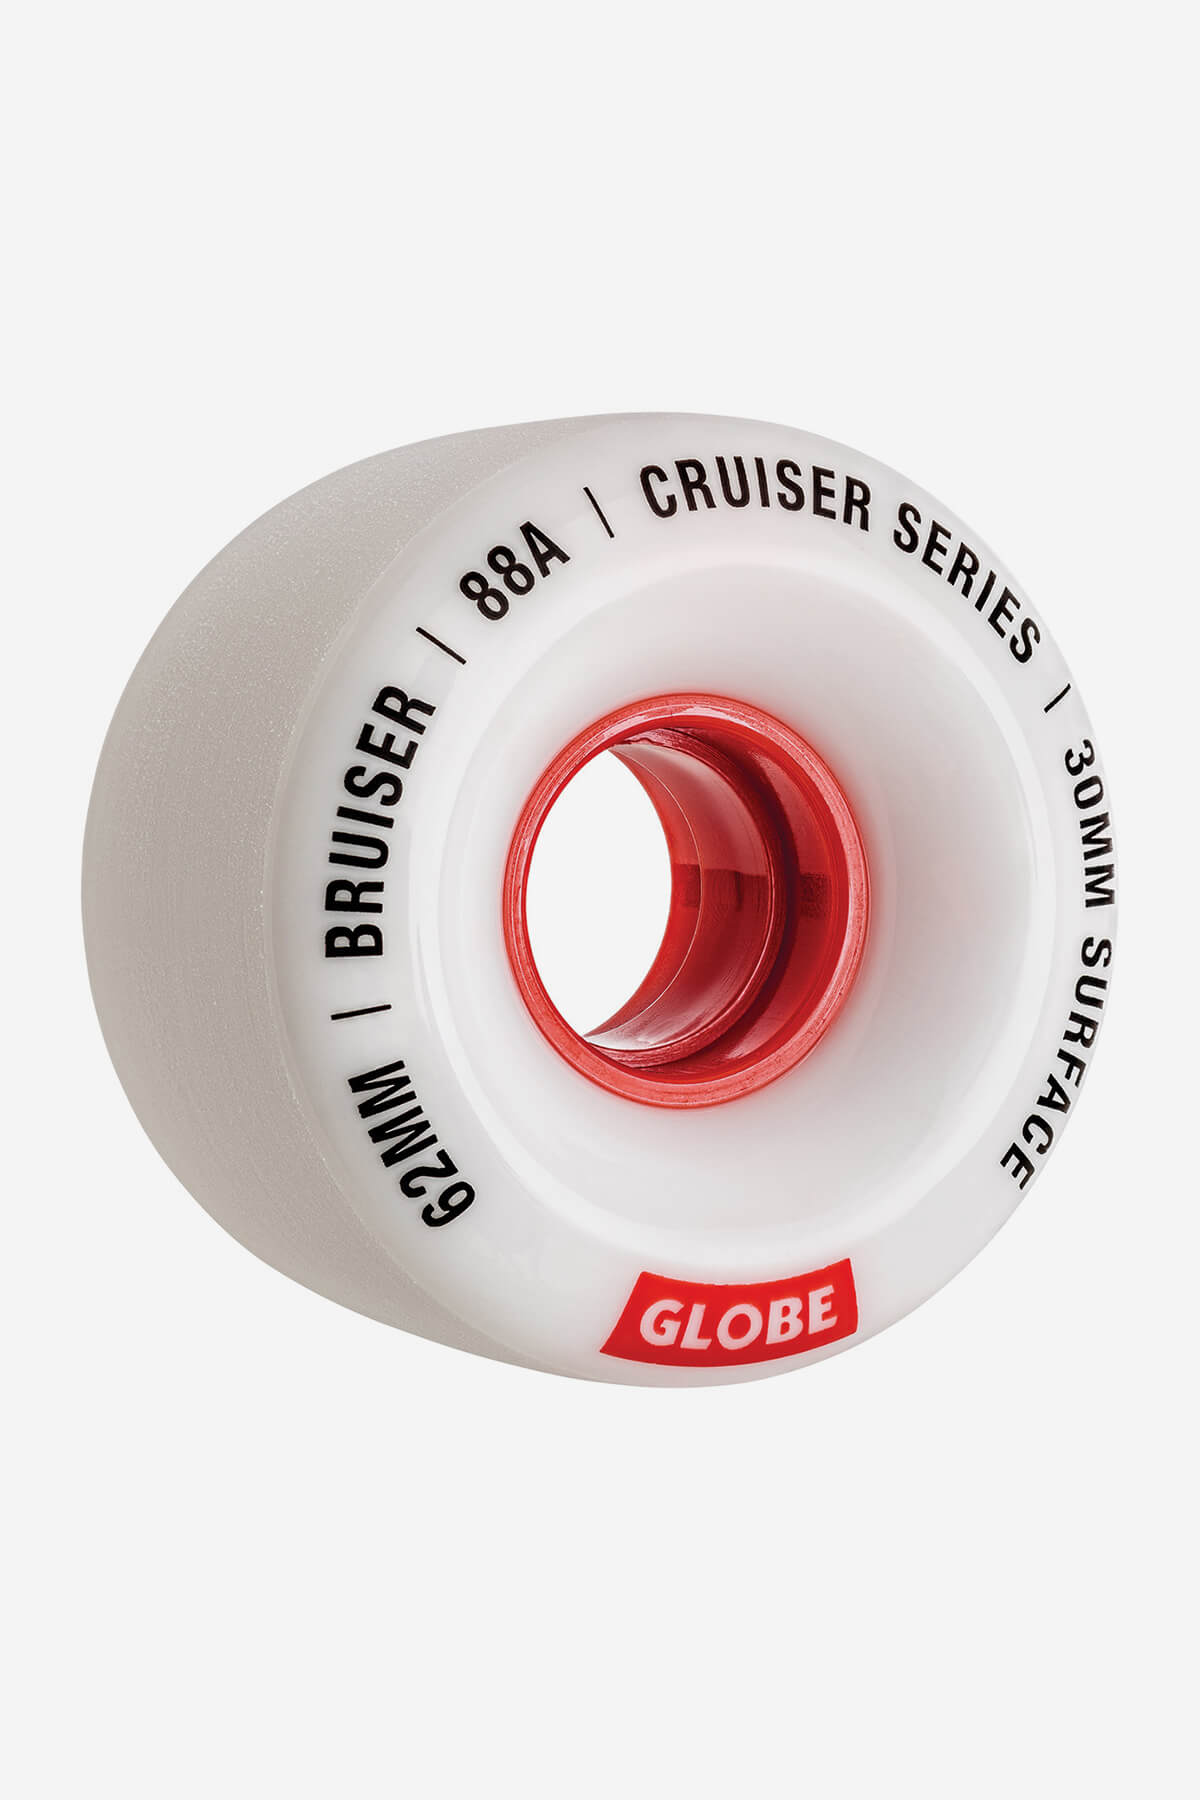 Ruota da skateboard Bruiser Cruiser 62mm - Bianco/Rosso Bianco/Rosso/62